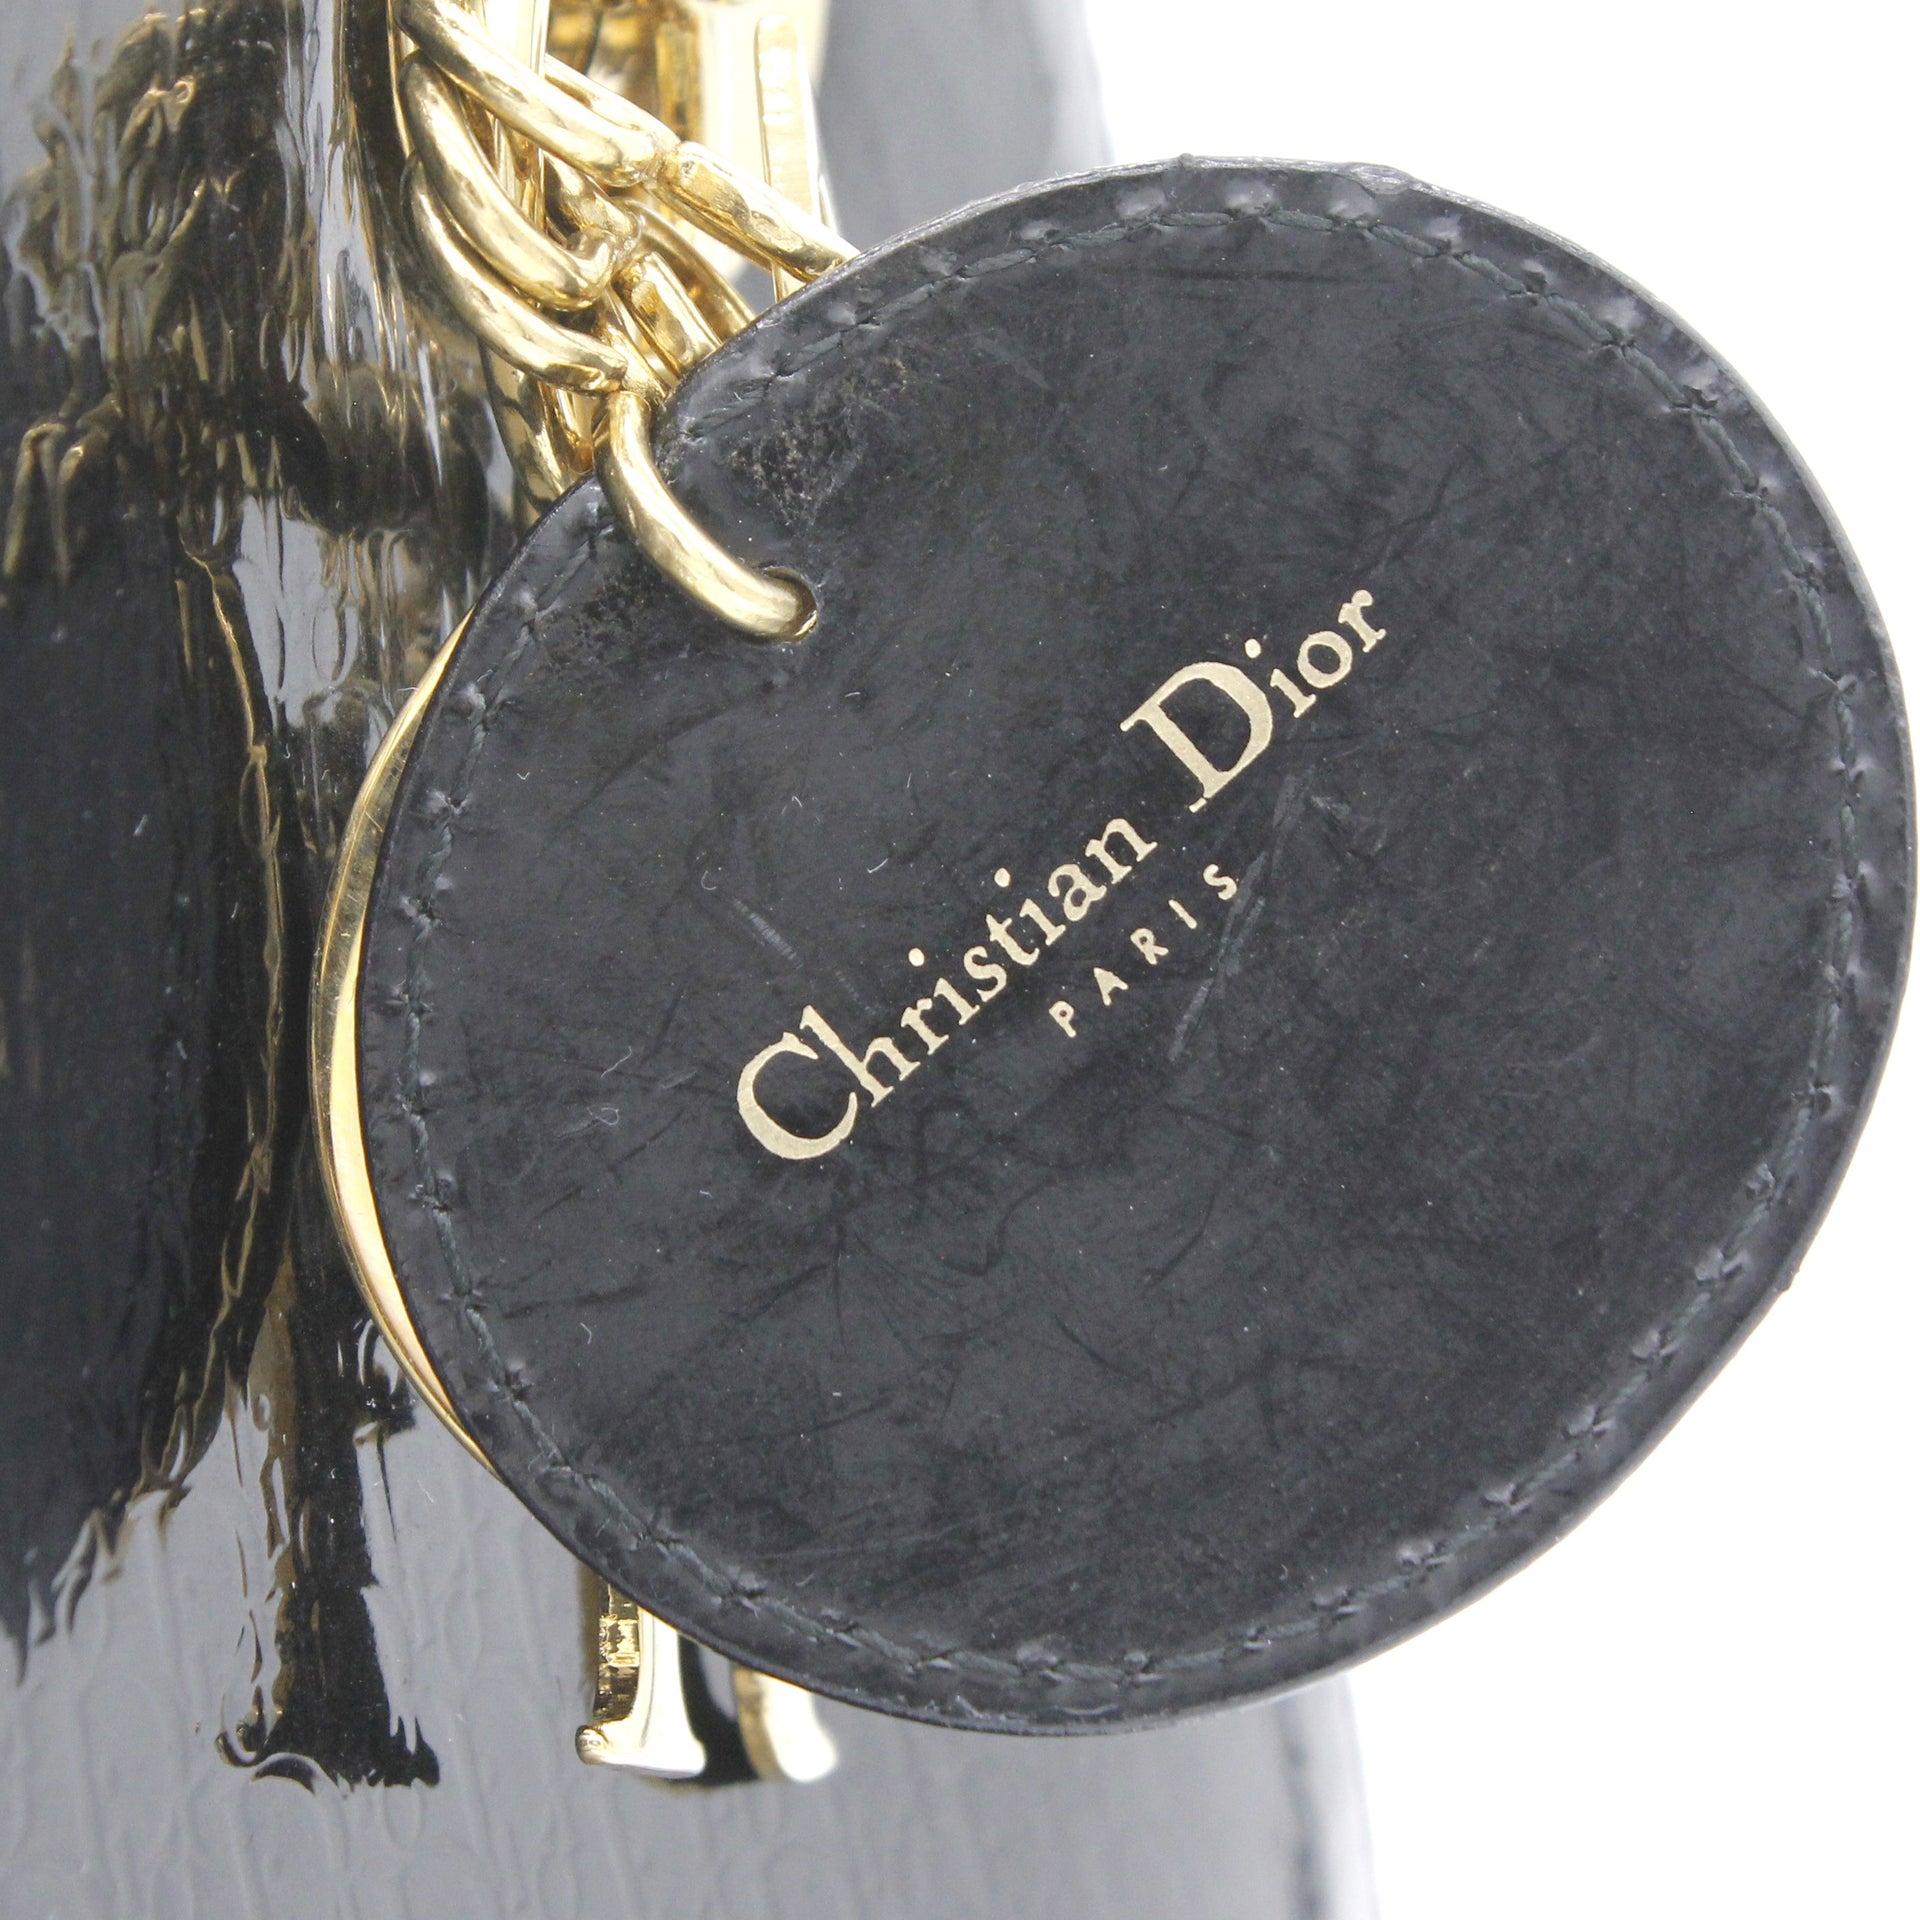 Medium Lady Dior in Black Patent Leather